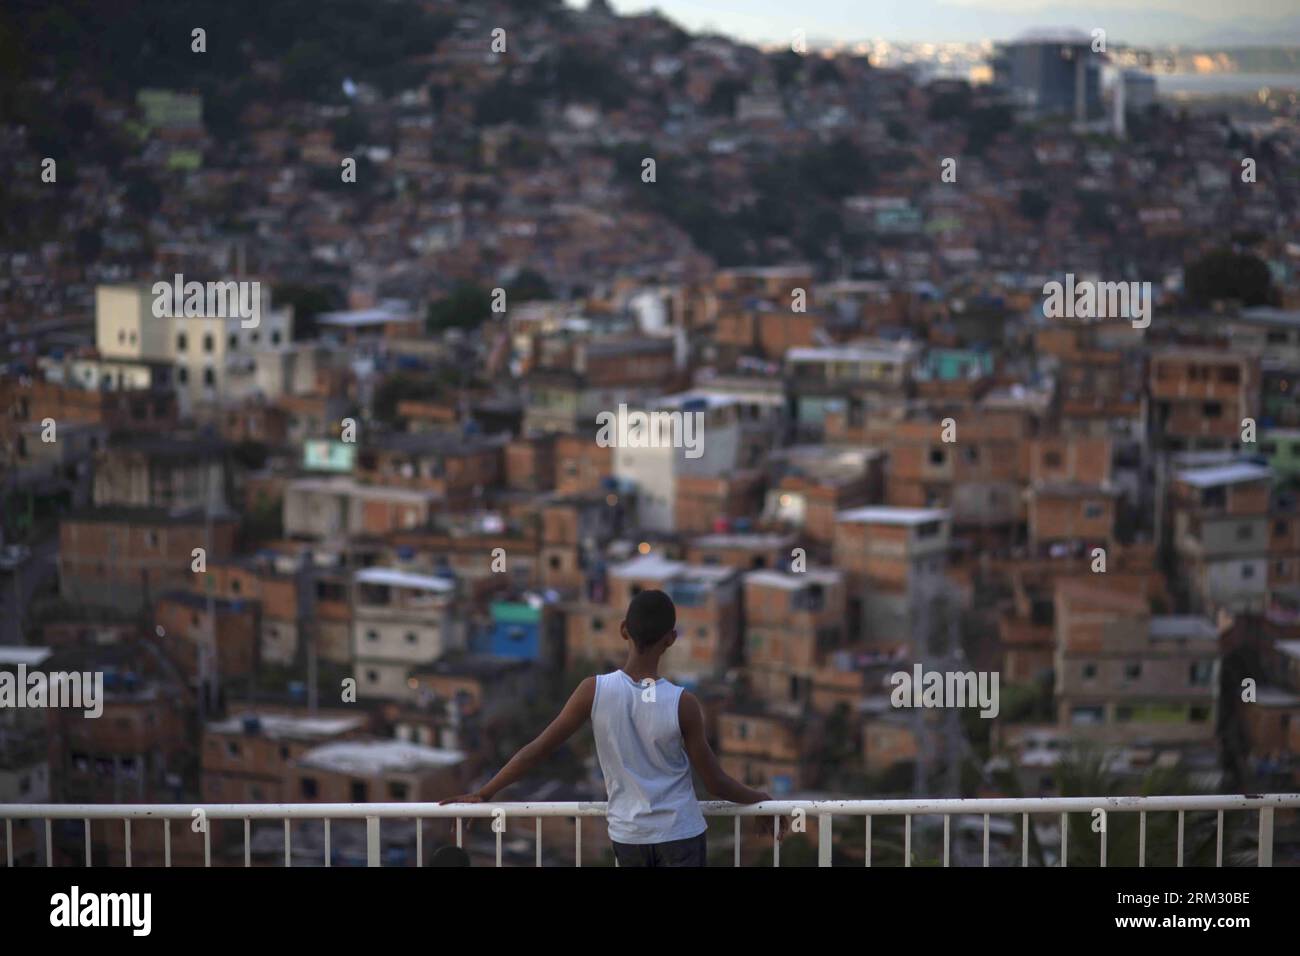 Bildnummer: 59922699  Datum: 30.06.2013  Copyright: imago/Xinhua (130630) -- RIO DE JANEIRO, June 30, 2013 (Xinhua) -- A boy looks at the houses of the favela (slum) Complexo do Alemao in Rio de Janeiro, Brazil, on June 29, 2013. Brazil will face Spain on Sunday during the final of the FIFA s Confederations Cup Brazil 2013. (Xinhua/David de la Paz) (tm) (SP)BRAZIL-RIO DE JANEIRO-FAVELA-SERIES PUBLICATIONxNOTxINxCHN Gesellschaft x2x xst 2013 quer Highlight o0 Junge Kind Armut     59922699 Date 30 06 2013 Copyright Imago XINHUA  Rio de Janeiro June 30 2013 XINHUA a Boy Looks AT The Houses of The Stock Photo